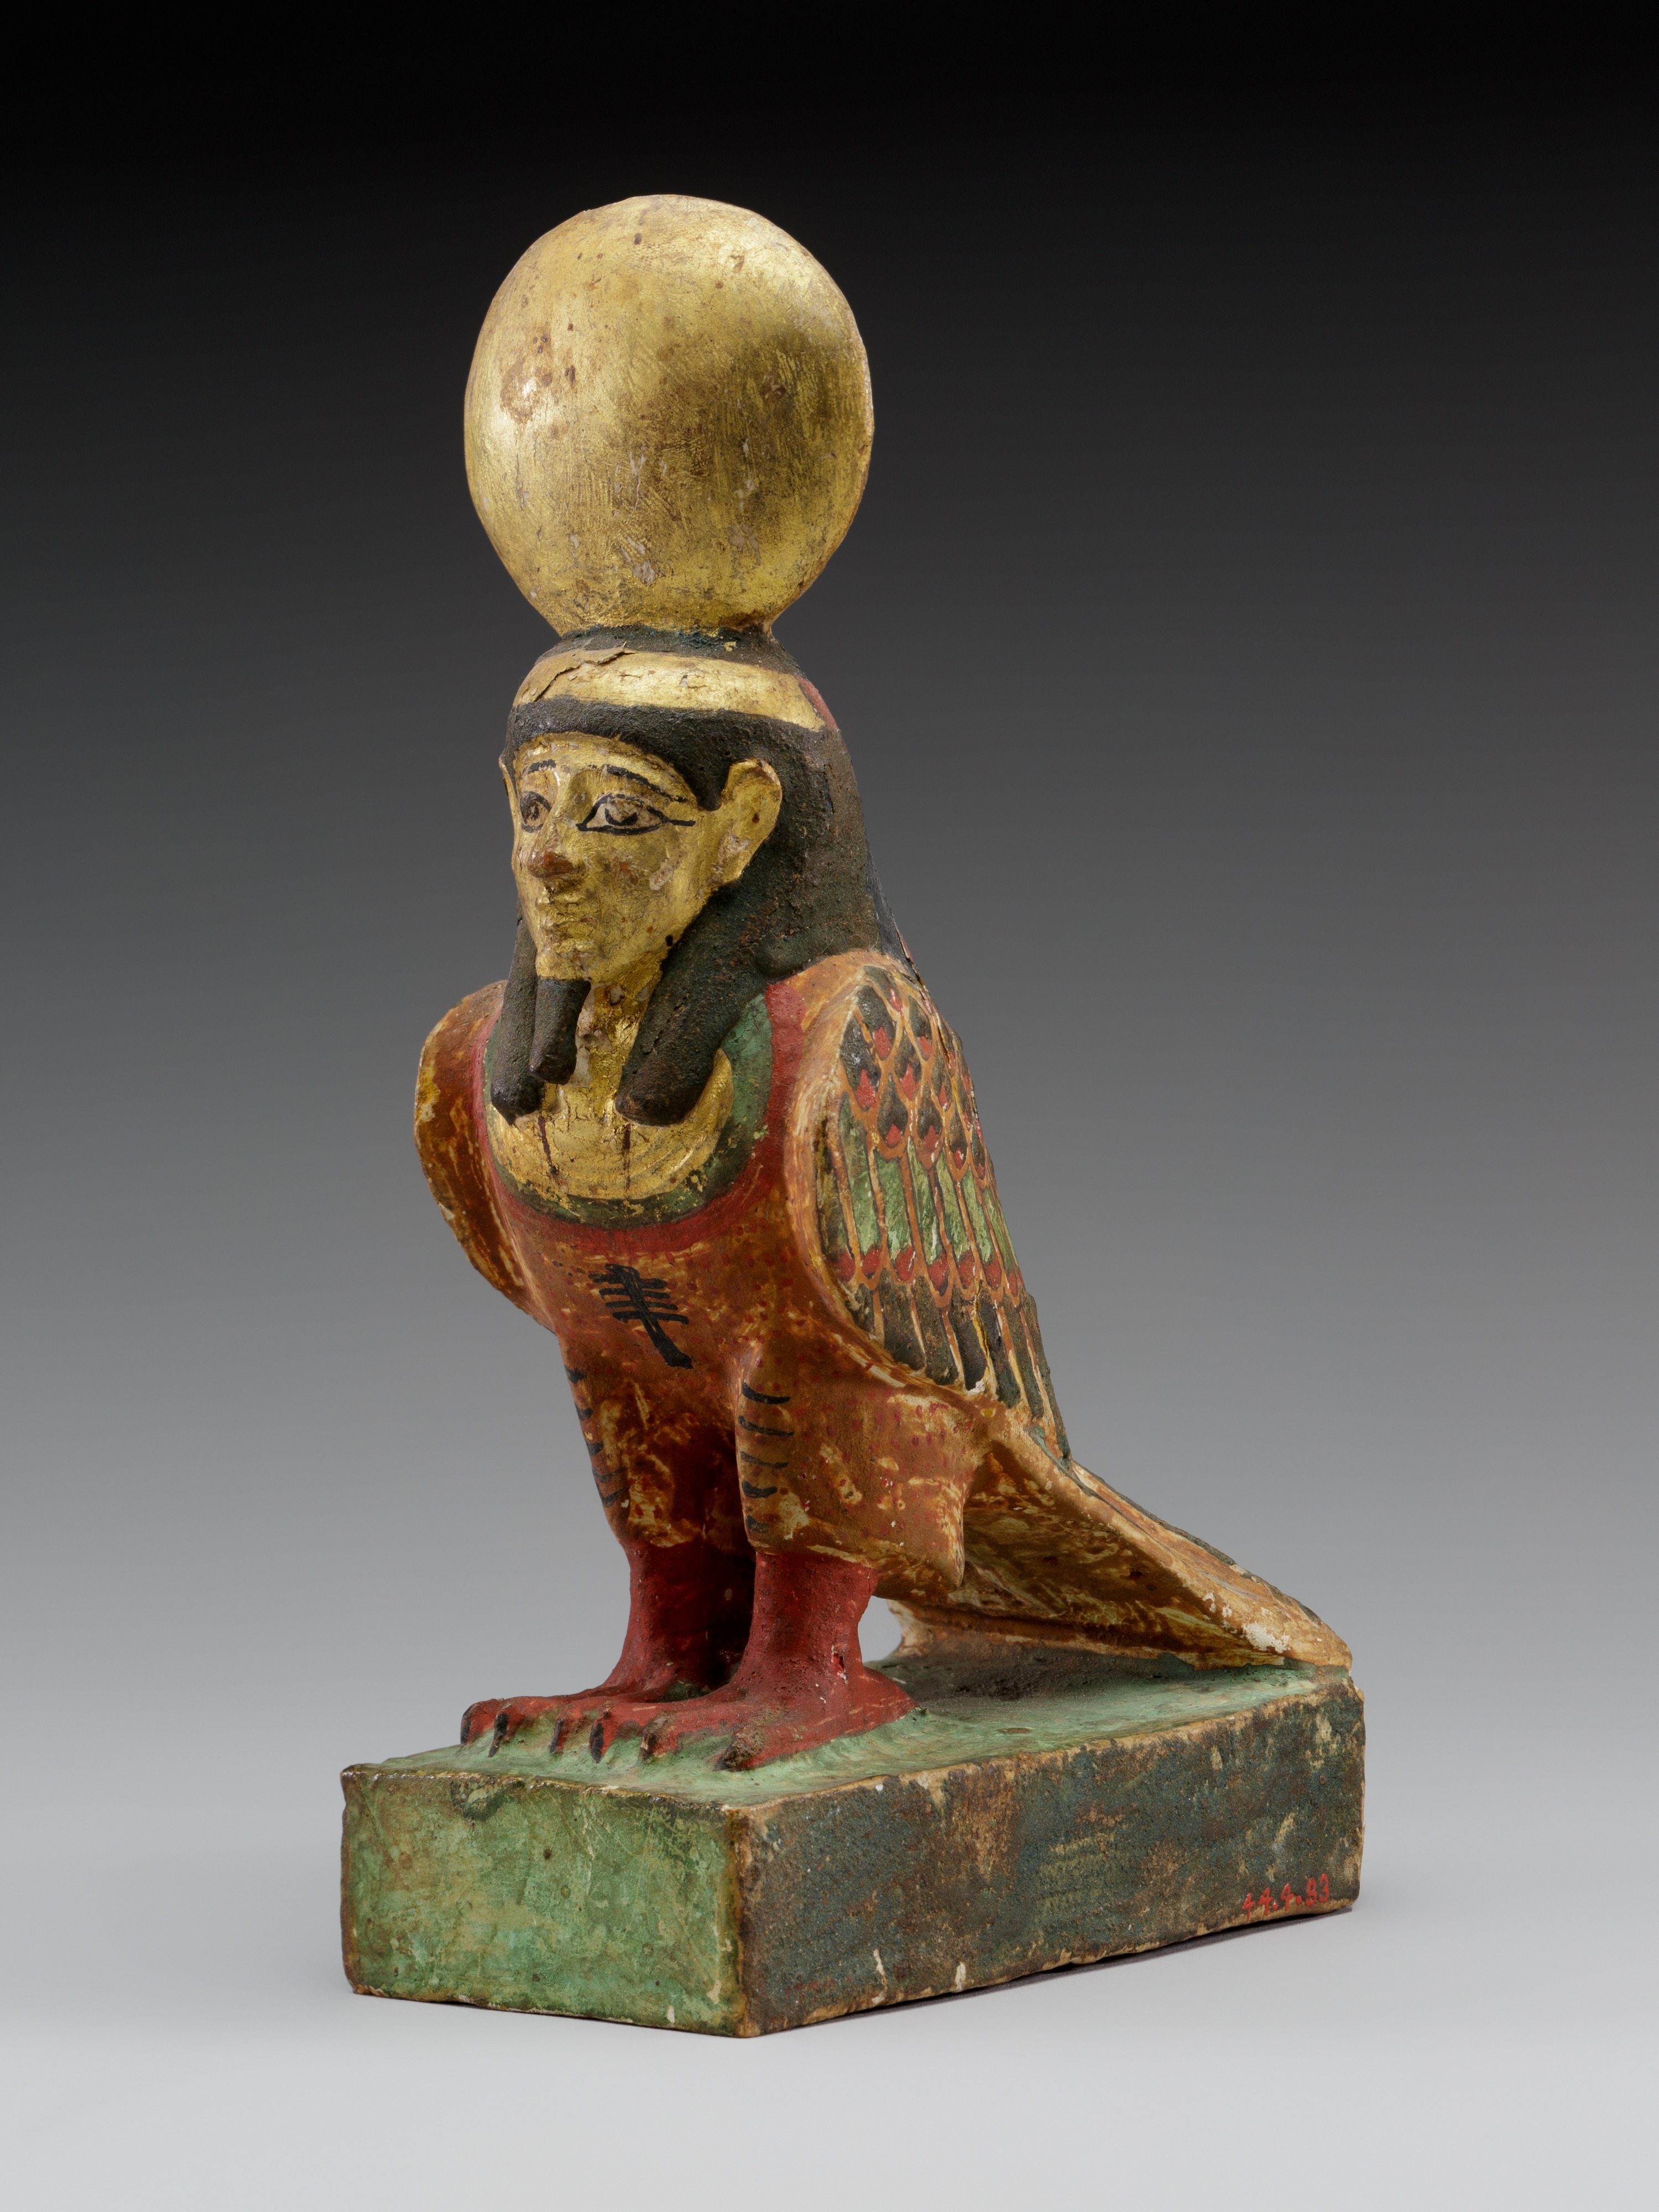 Ba-bird Human Soul Egyptian Statue Miniature Human Bird Figurine Museum Replica